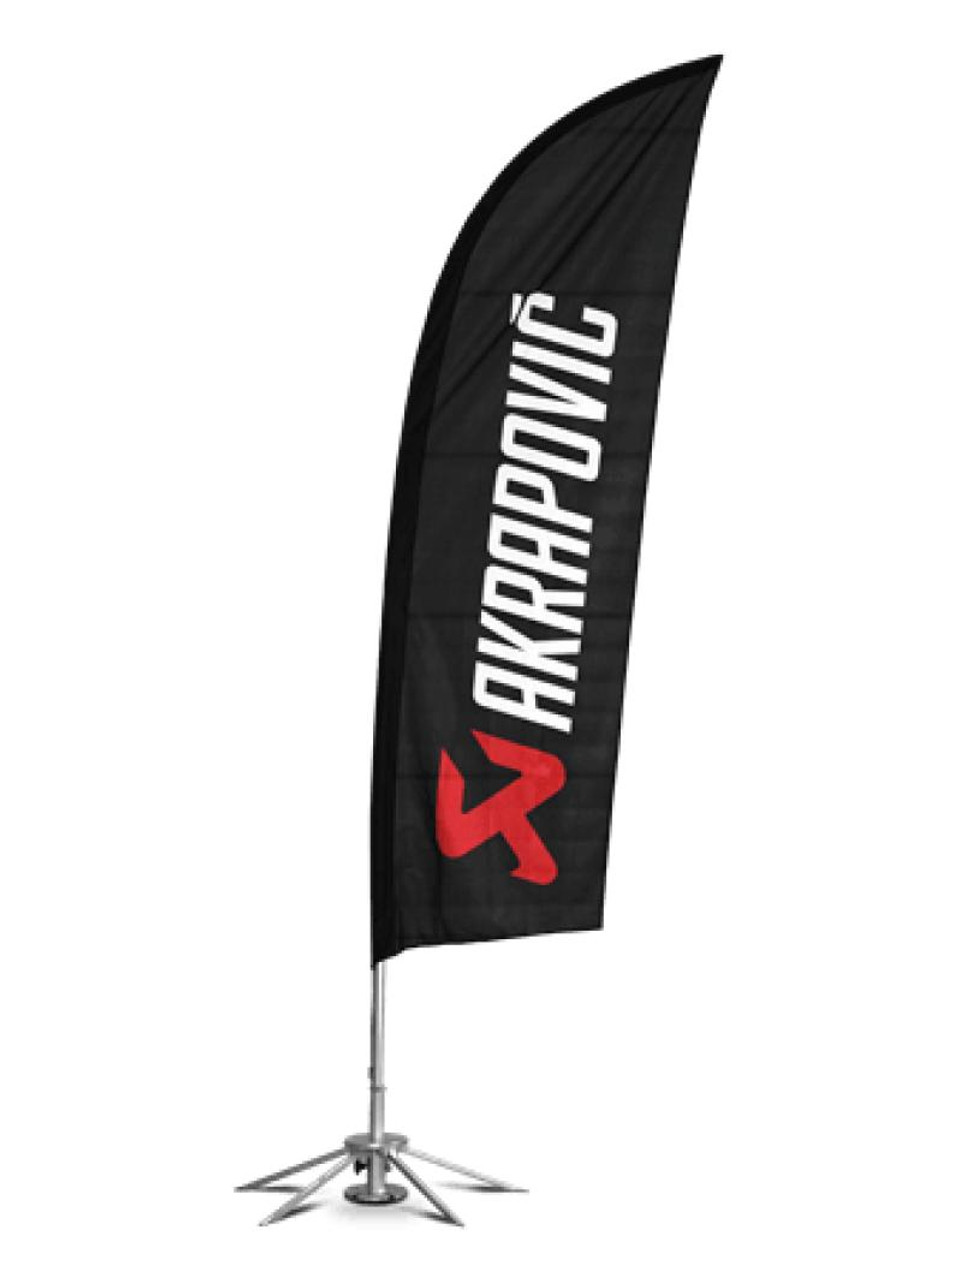  Akrapovic Self-standing flag set with tent flag kit - 801439 